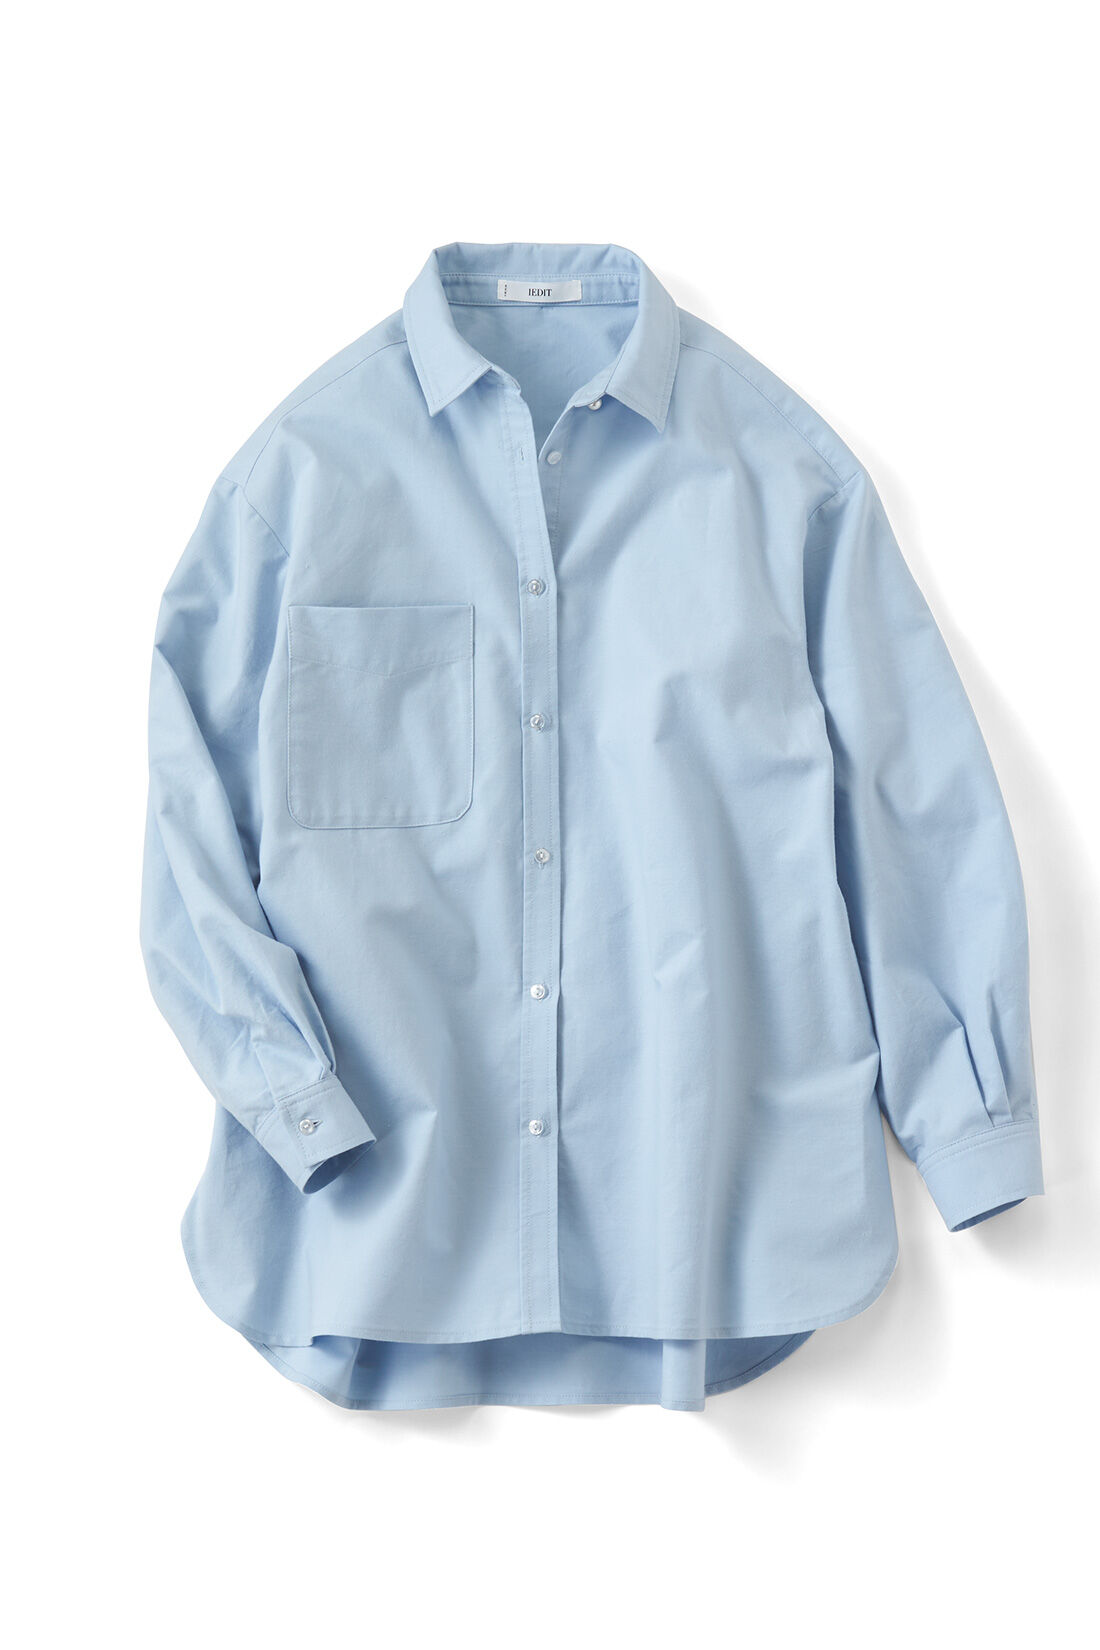 IEDIT|IEDIT[イディット]　バックフレアーデザインがきいた オックスフォード素材のこなれ見えシャツ〈グレー〉|ブルー